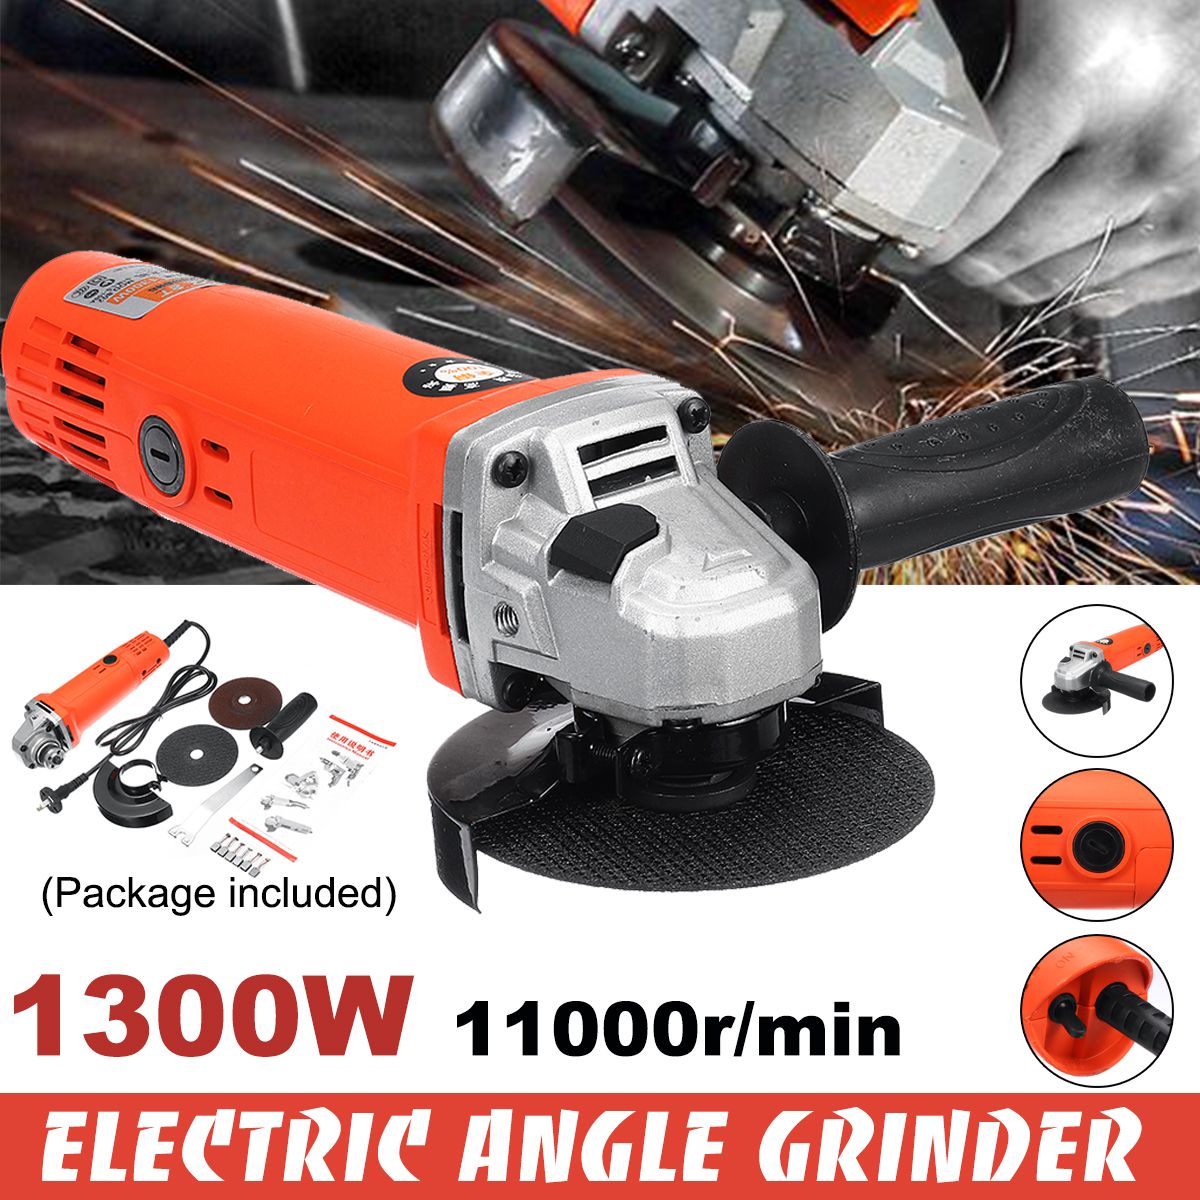 1300W-Electric-Angle-Grinder-11000rmin-Grinding-Polishing-Machine-Set-1612291